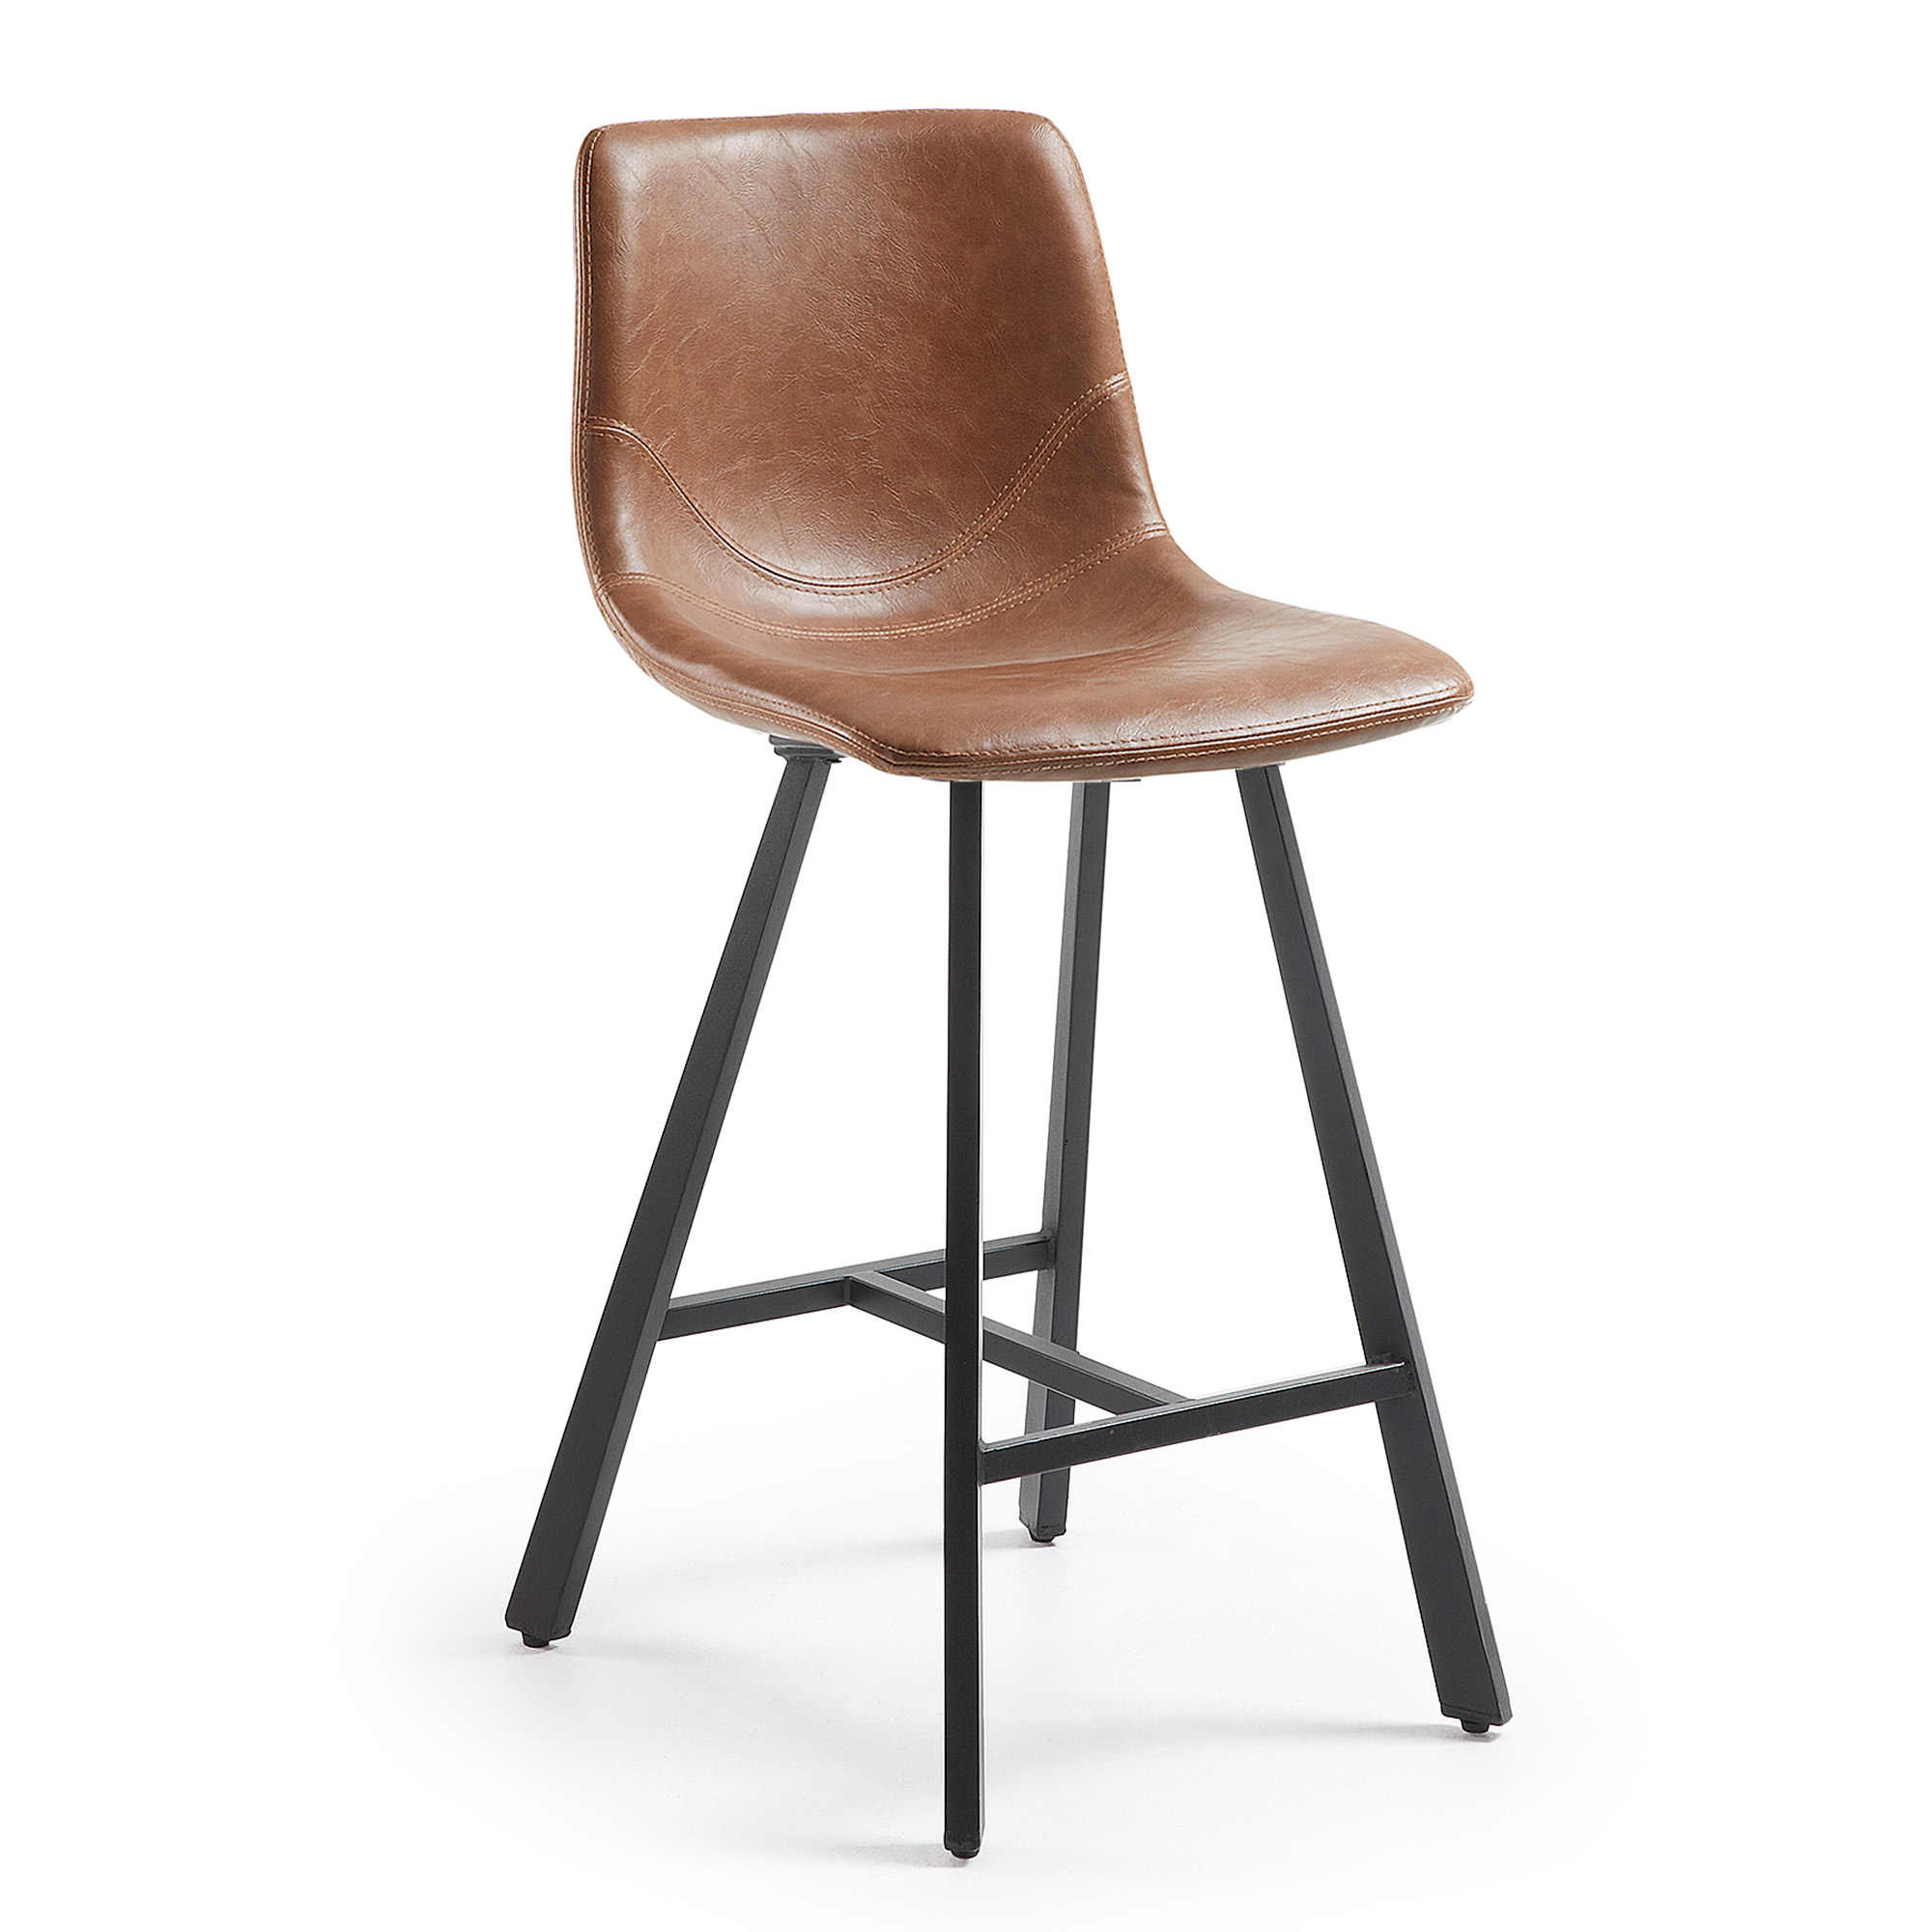 Полубарный стул Trac коричневый